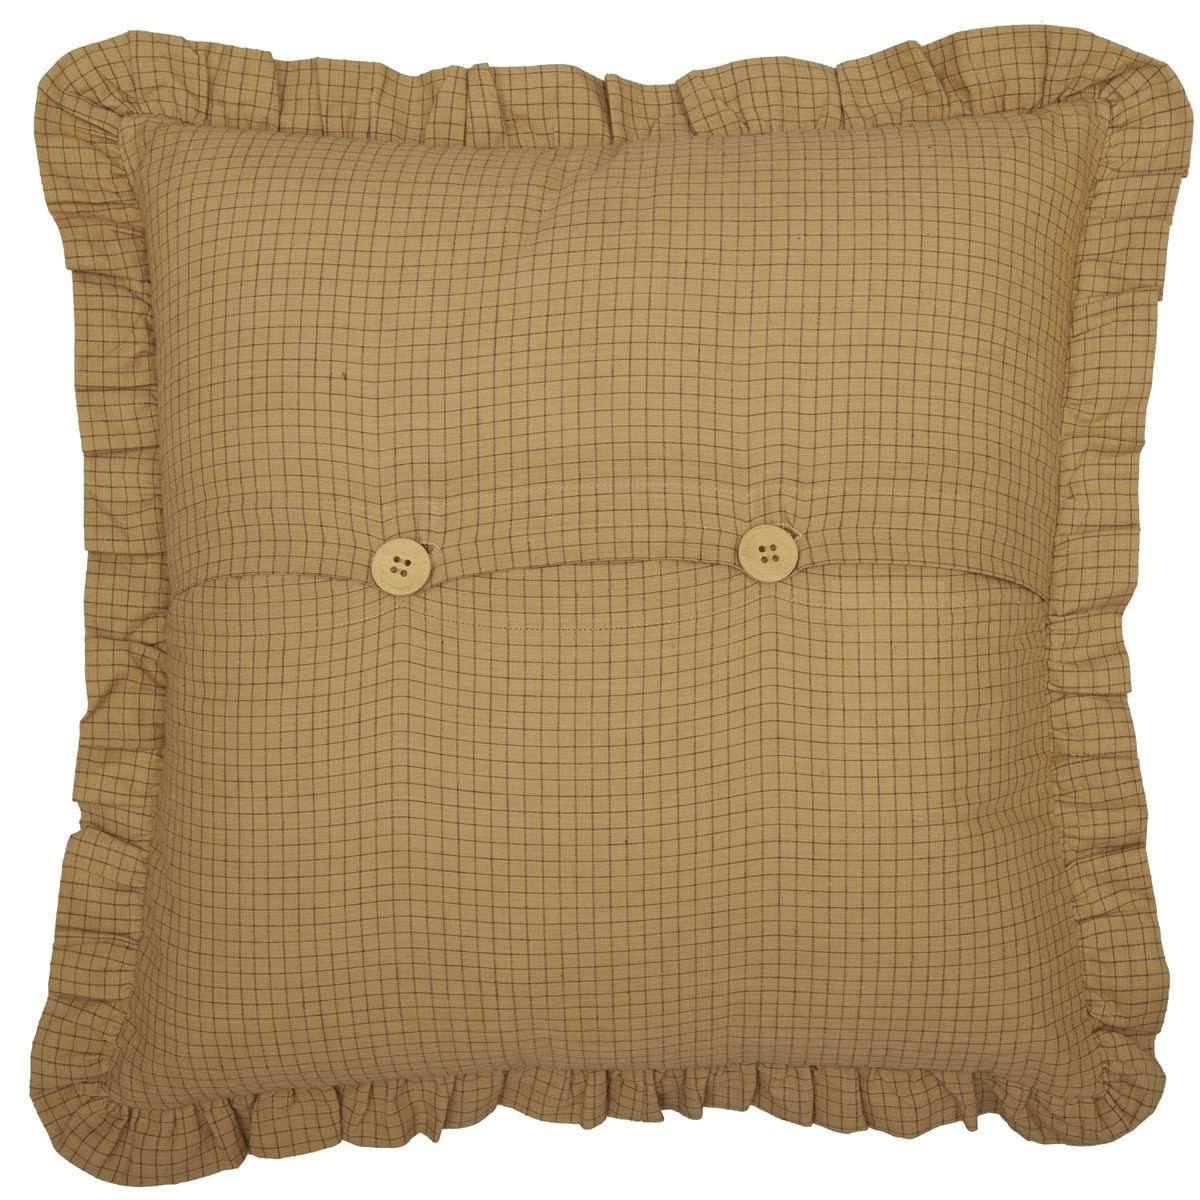 Landon Scarecrow Pillow 18x18 VHC Brands back